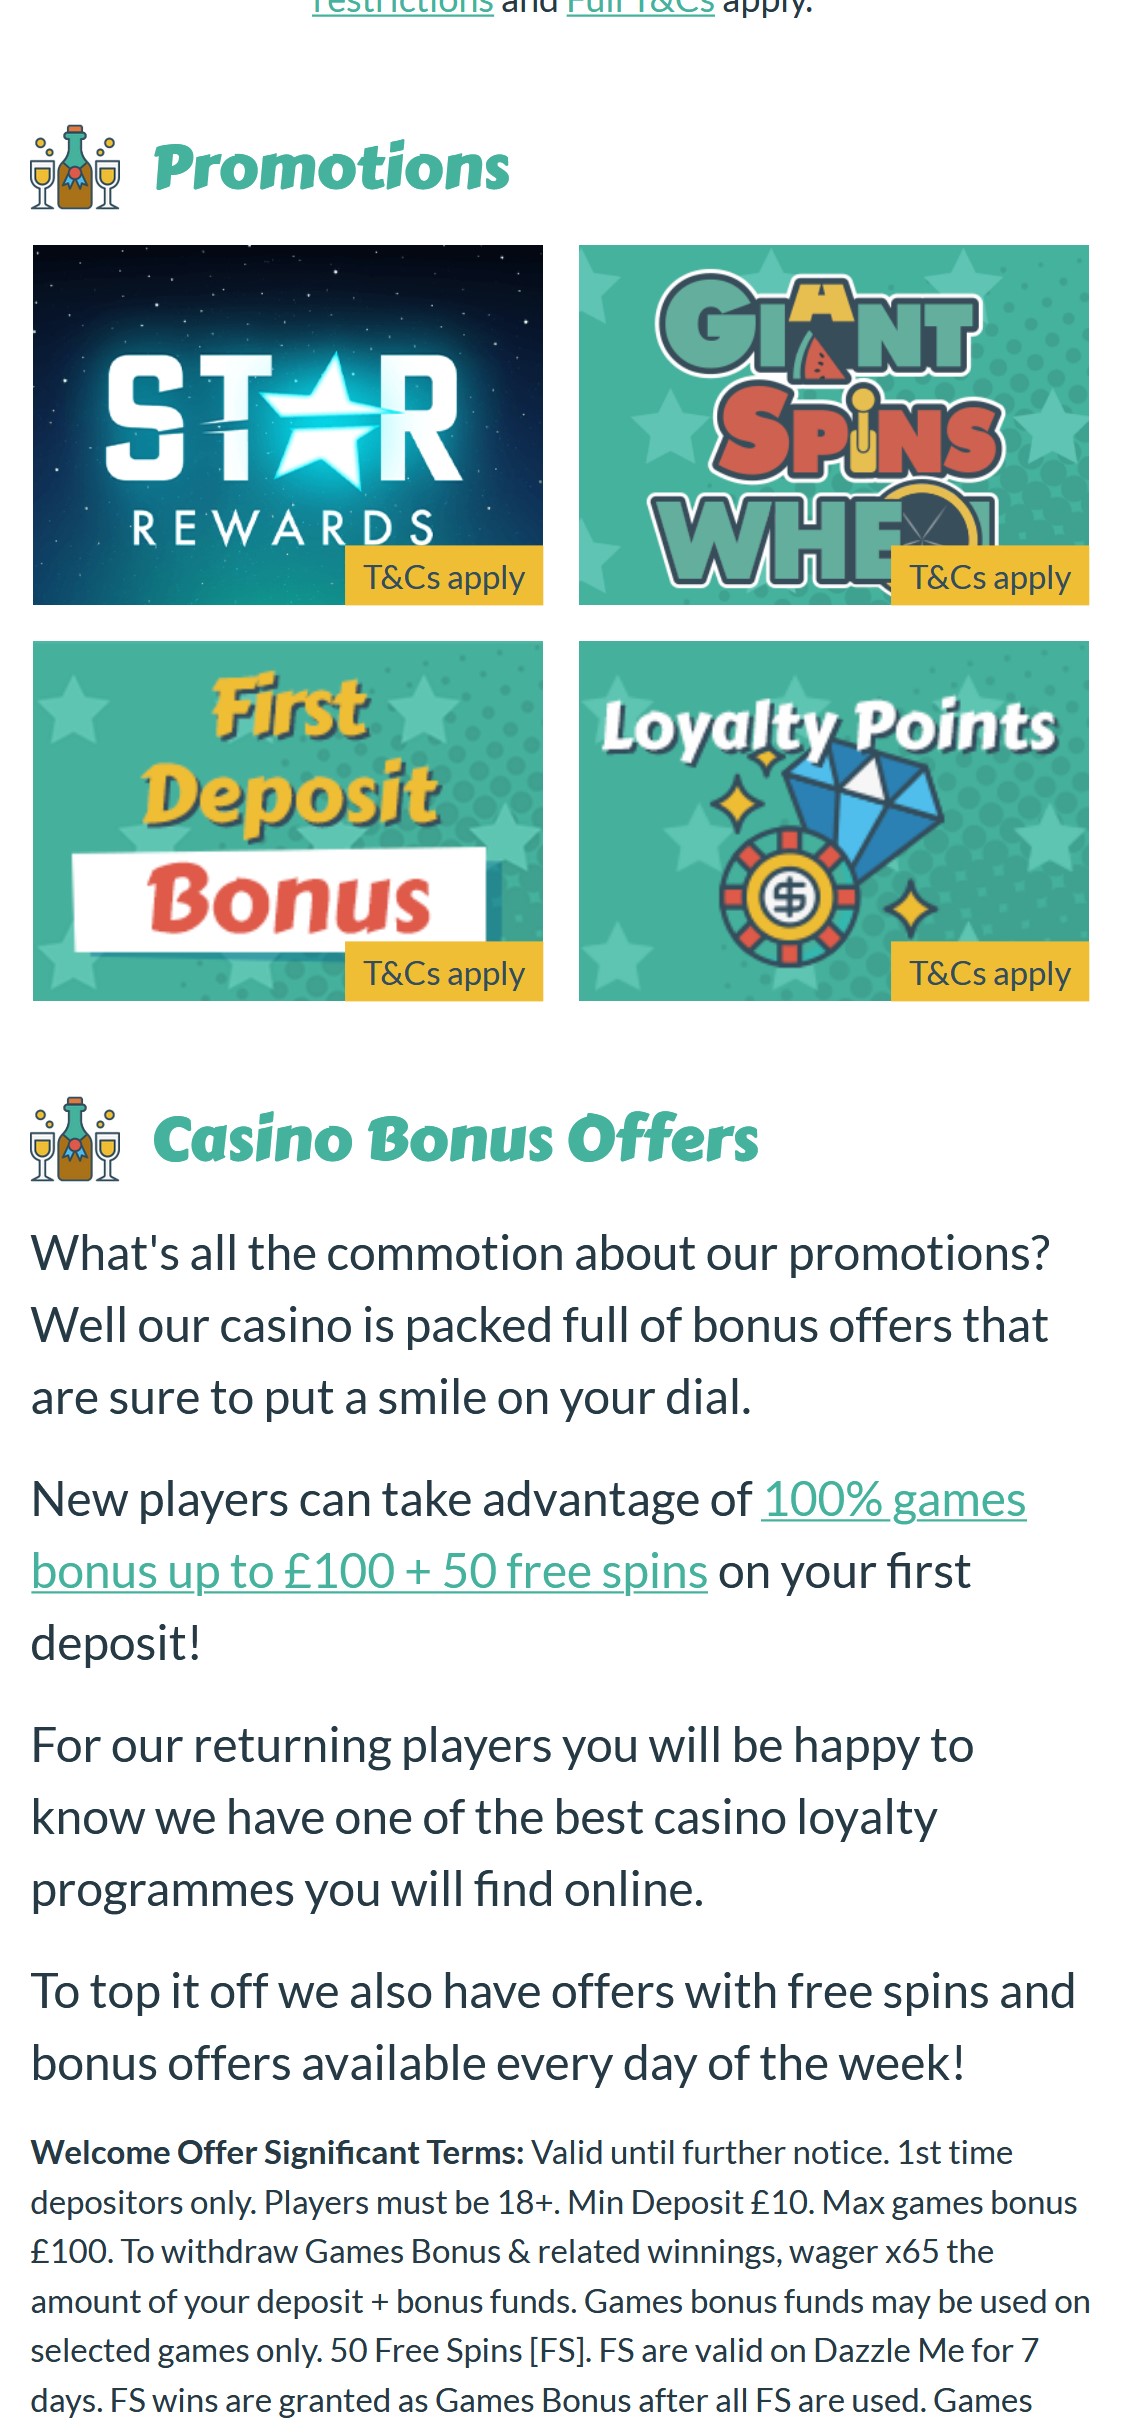 Giant Spins Casino Mobile No Deposit Bonus Review